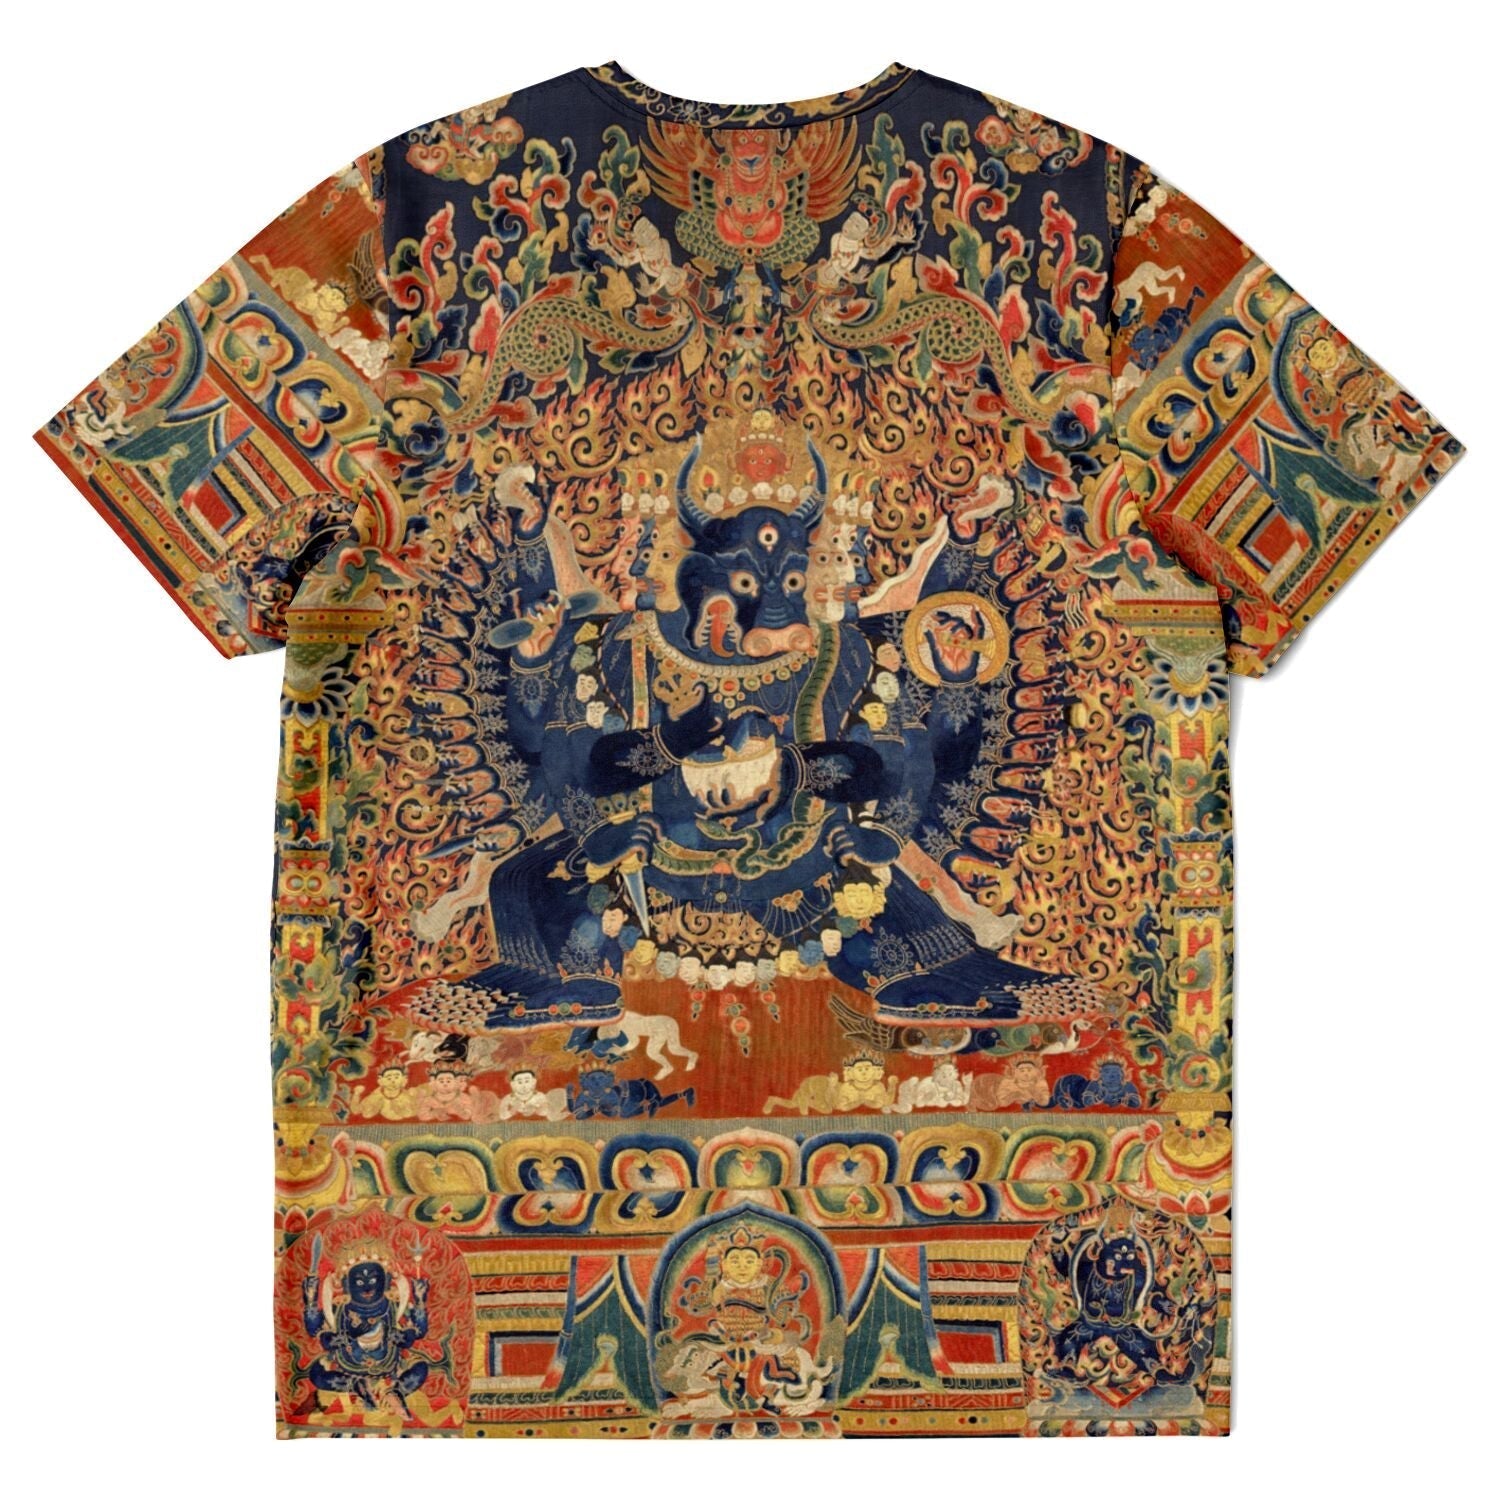 T-shirt Vajrabhairava Wrathful Deity | Tibetan Buddhist Protection, Meditation Deity | Zen Manjushri Emanation Graphic Art T-Shirt